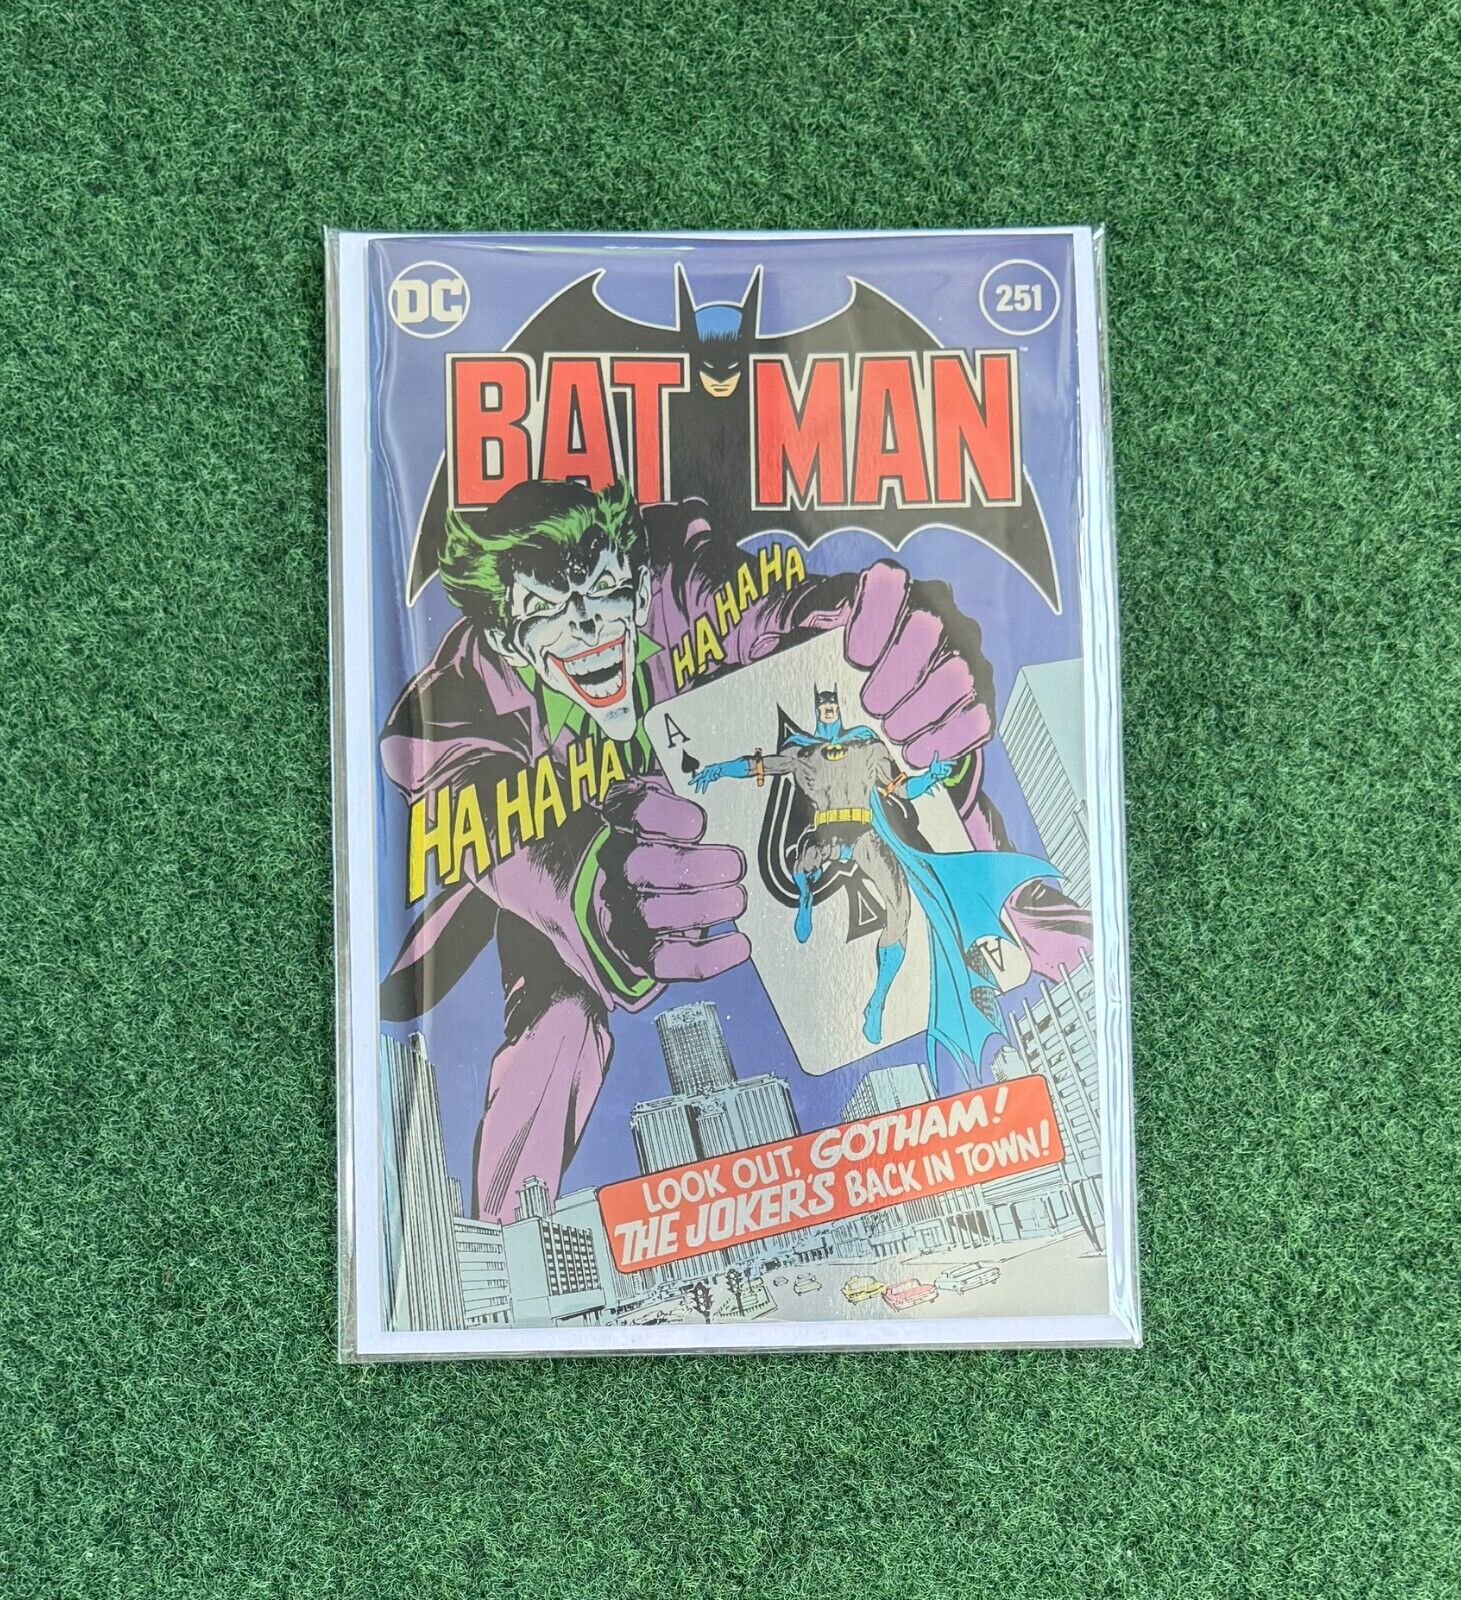 Batman #251 | Neal Adams NYCC Exclusive| Foil Variant